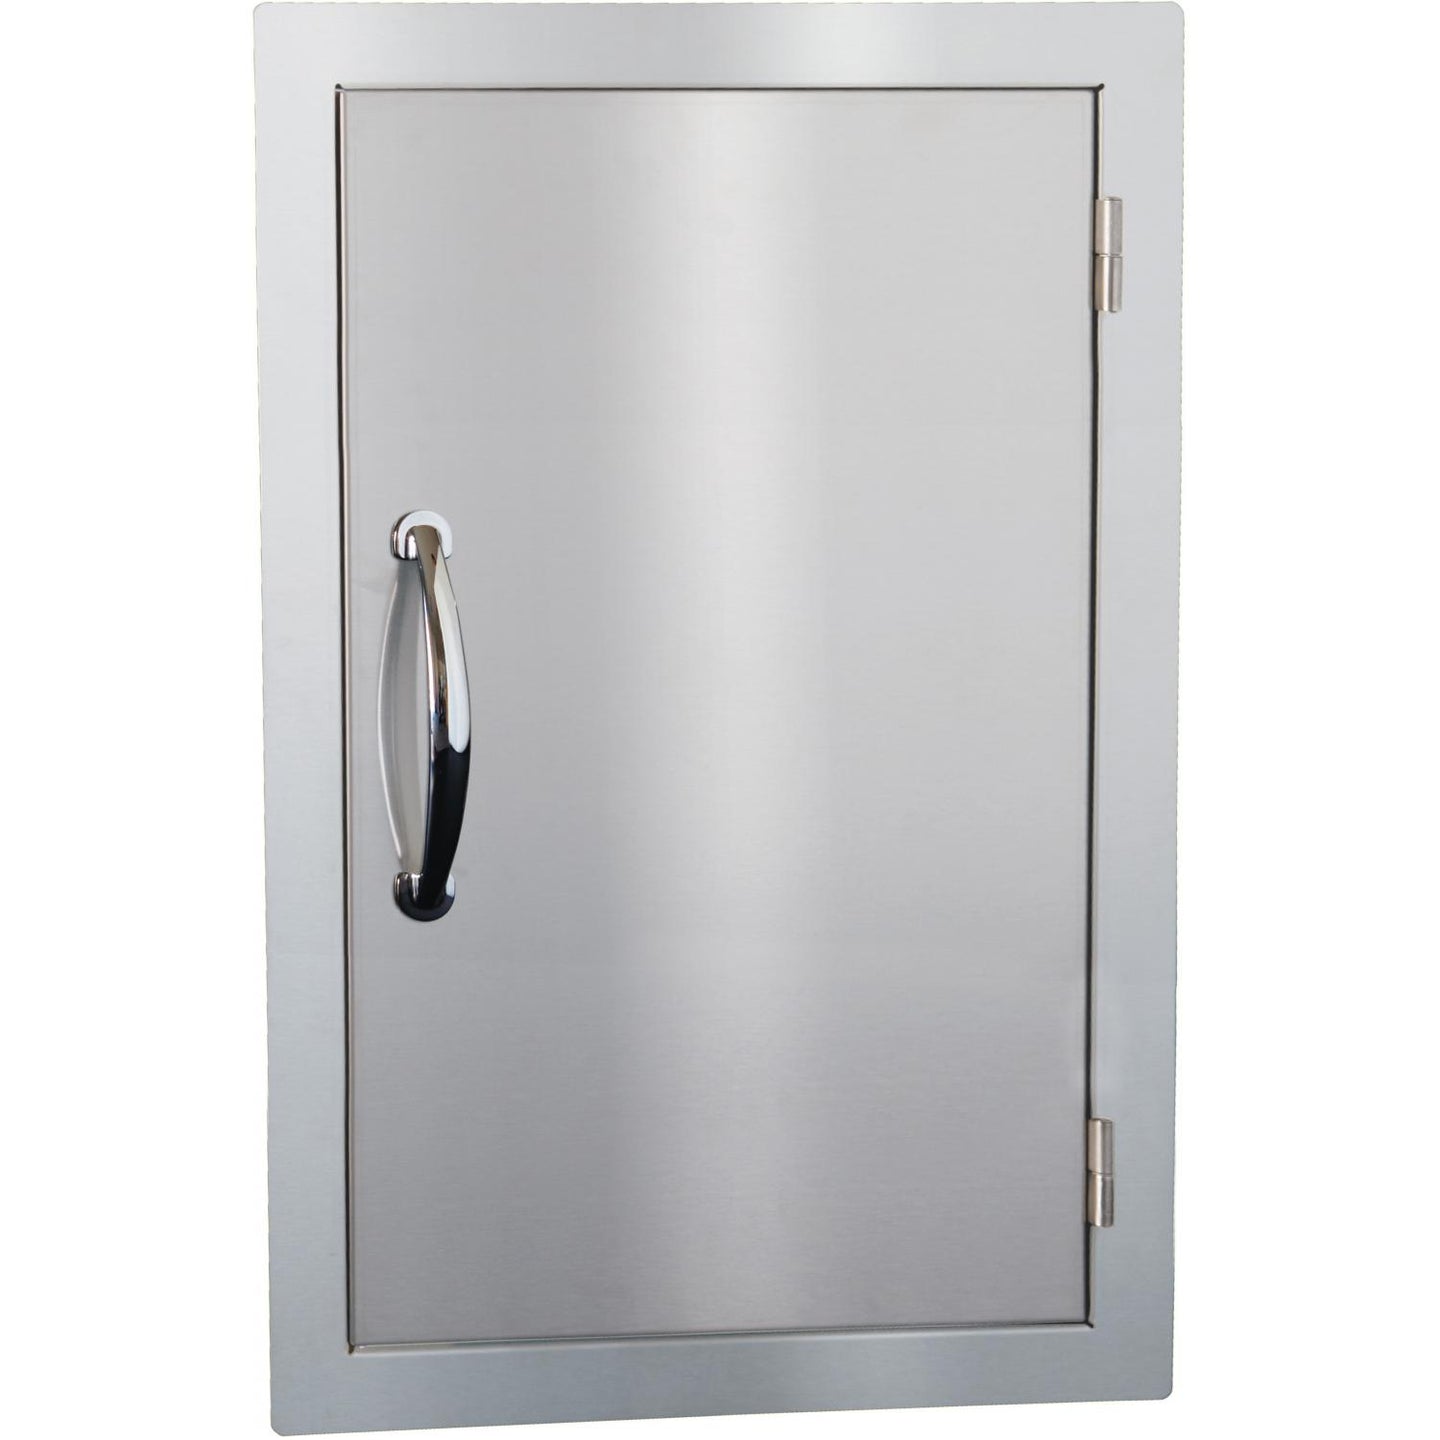 Summerset 17-Inch Stainless Steel Flush Mount Single Access Door - Vertical - SSDVL-1